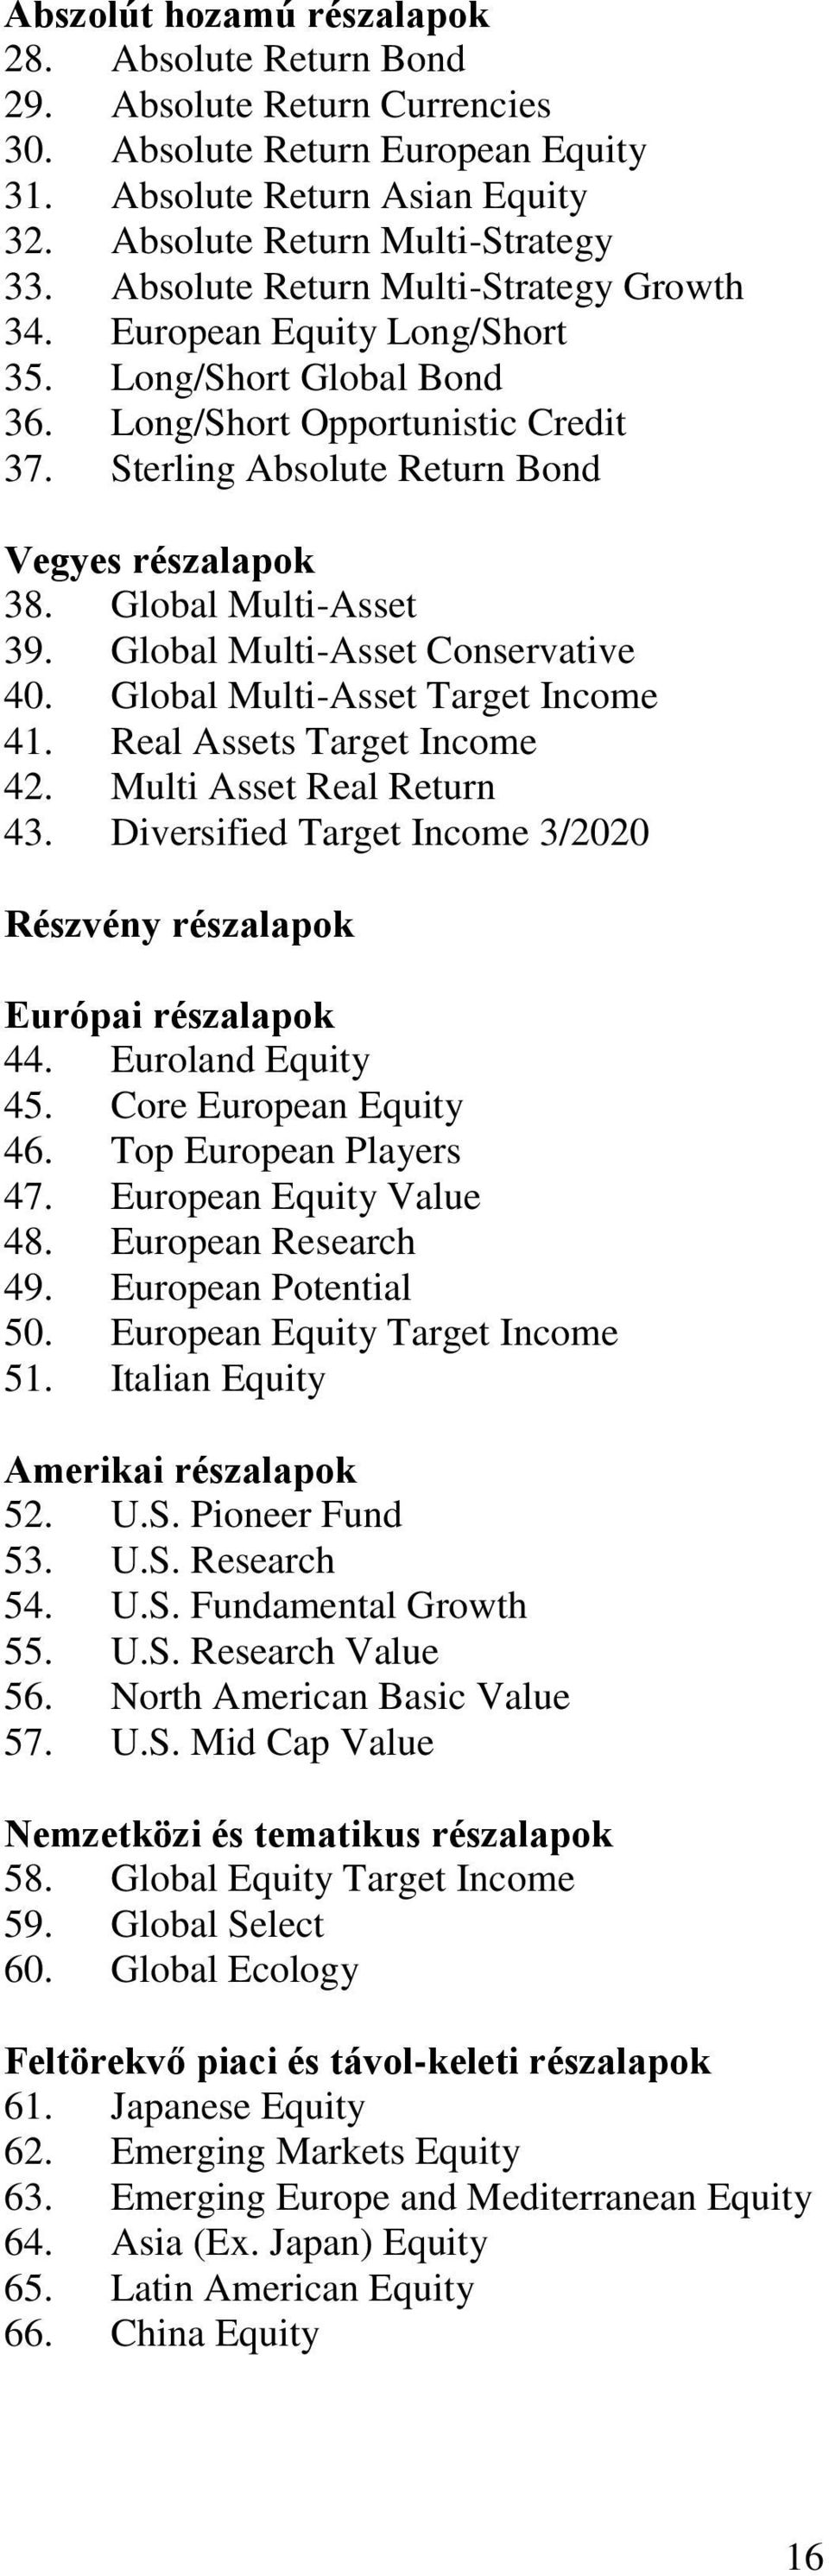 Global Multi-Asset 39. Global Multi-Asset Conservative 40. Global Multi-Asset Target Income 41. Real Assets Target Income 42. Multi Asset Real Return 43.